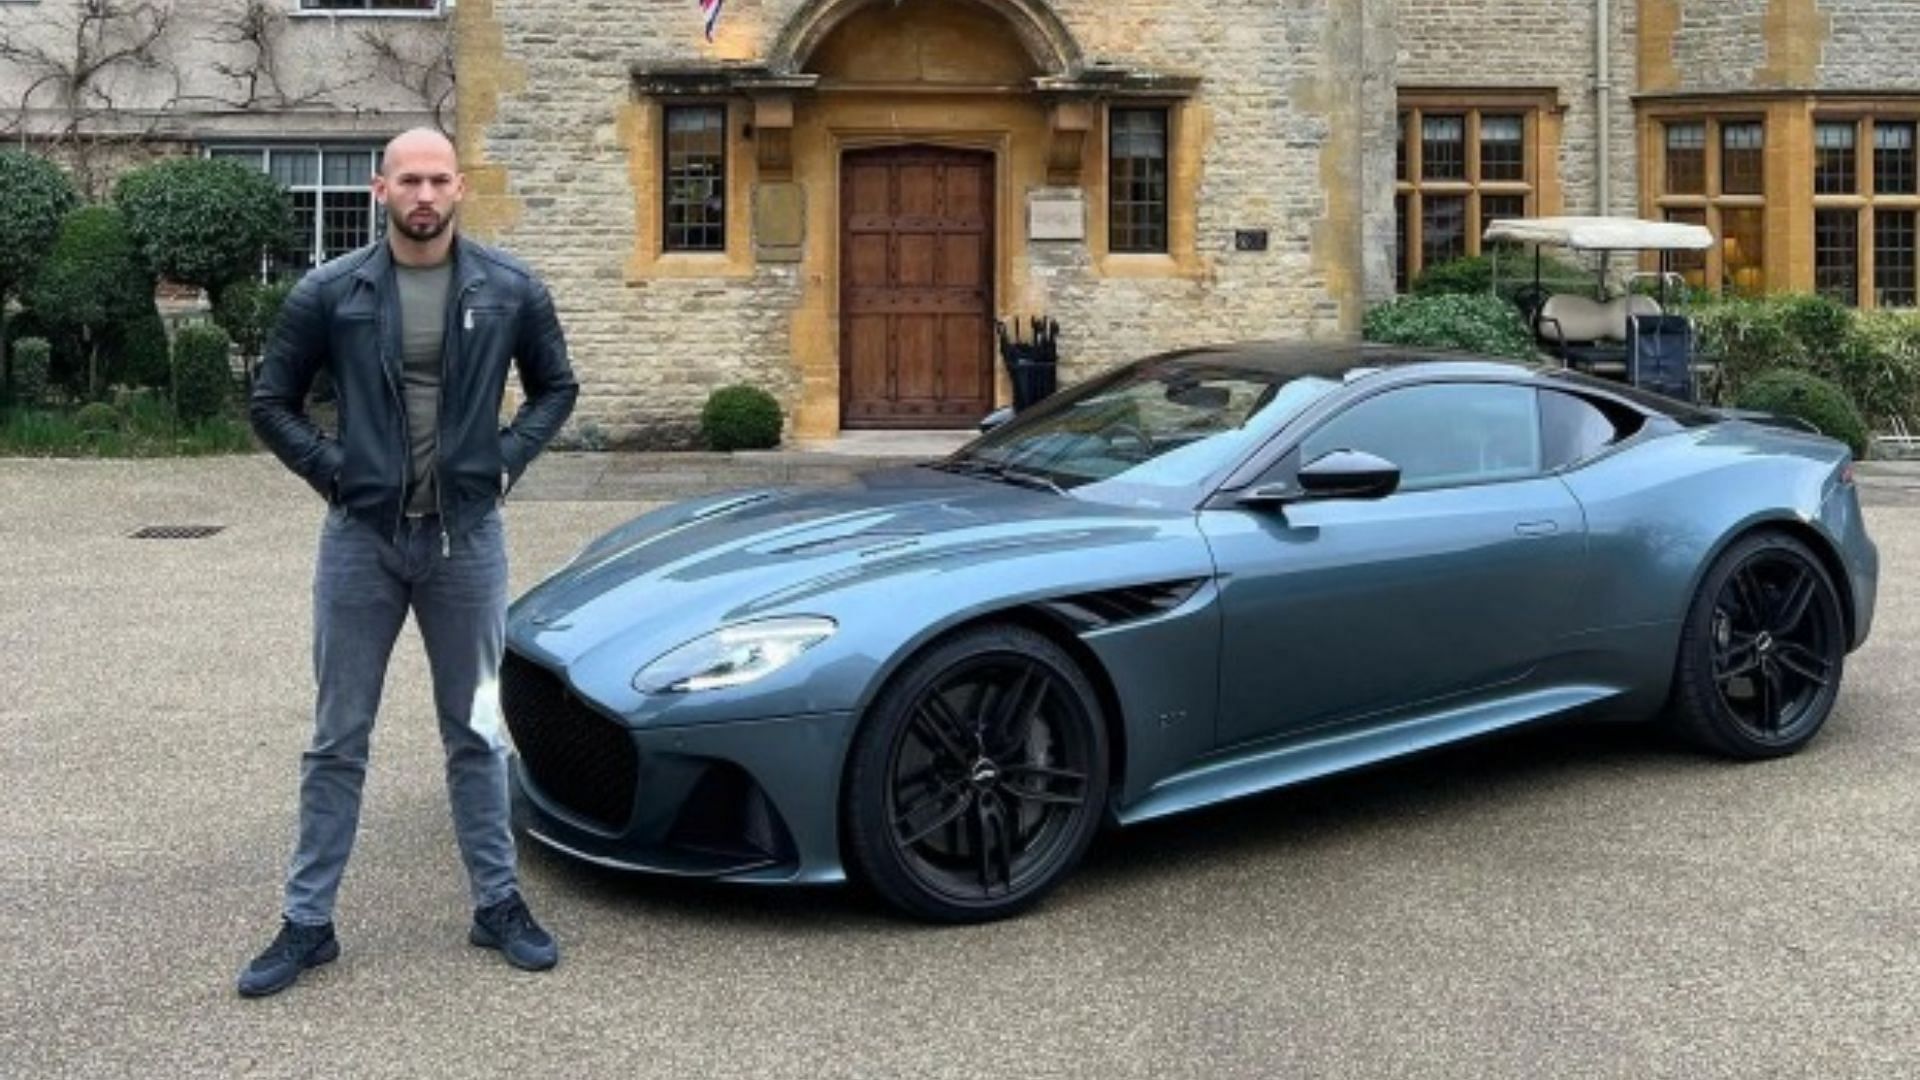 Tate's Aston Martin DBS Superleggera (Image via Instagram)